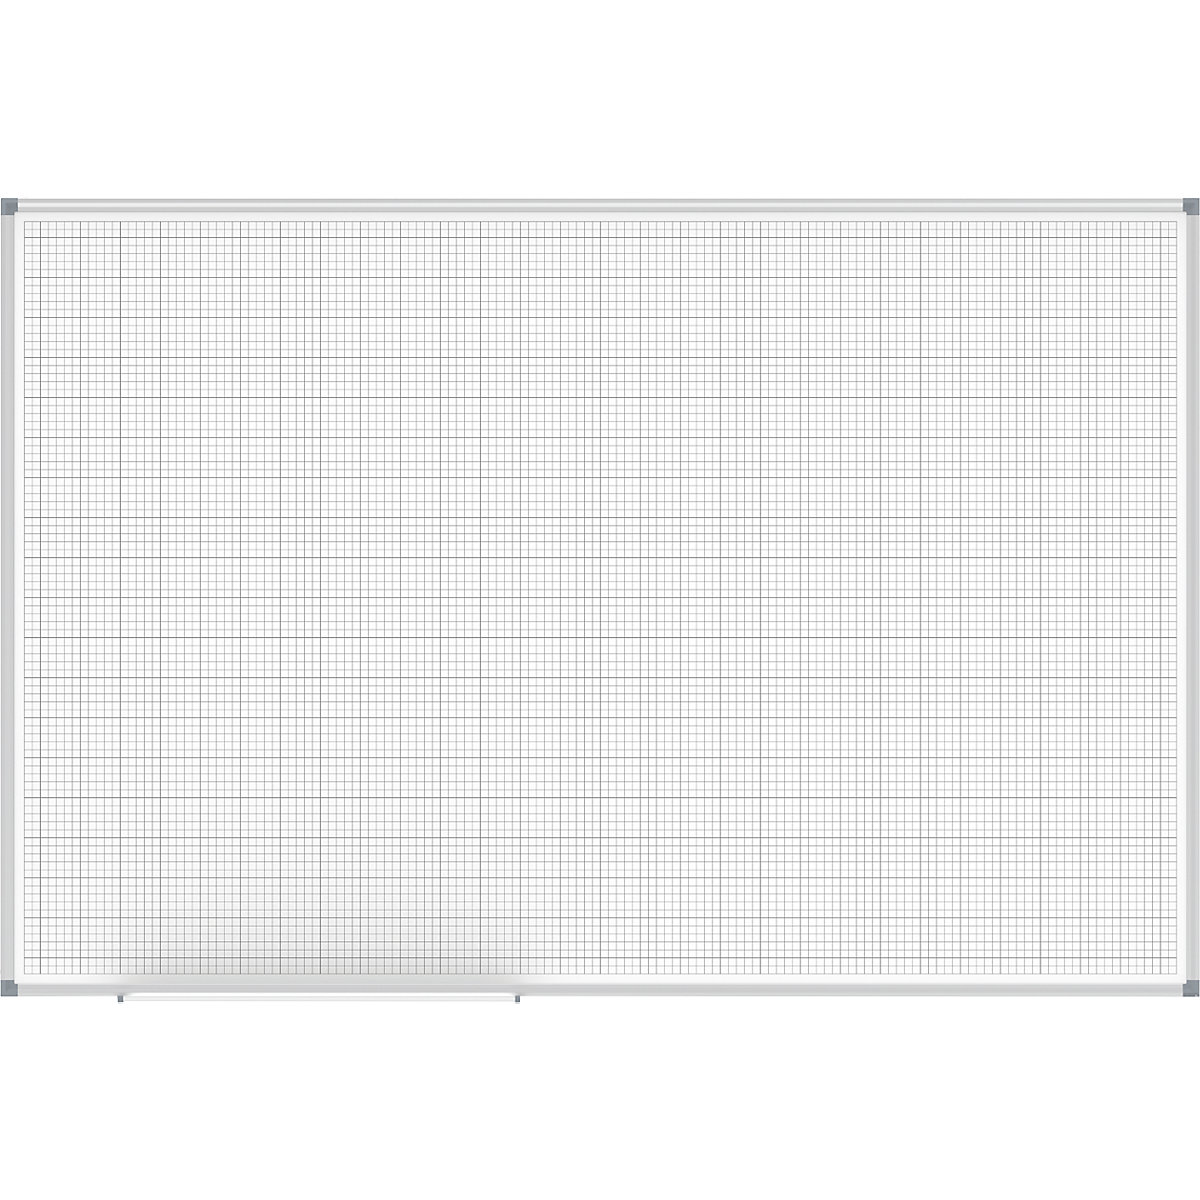 Tablă cu caroiaj MAULstandard, albă – MAUL, caroiaj 10 x 10 / 50 x 50 mm, lăț. x î. 1500 x 1000 mm-3